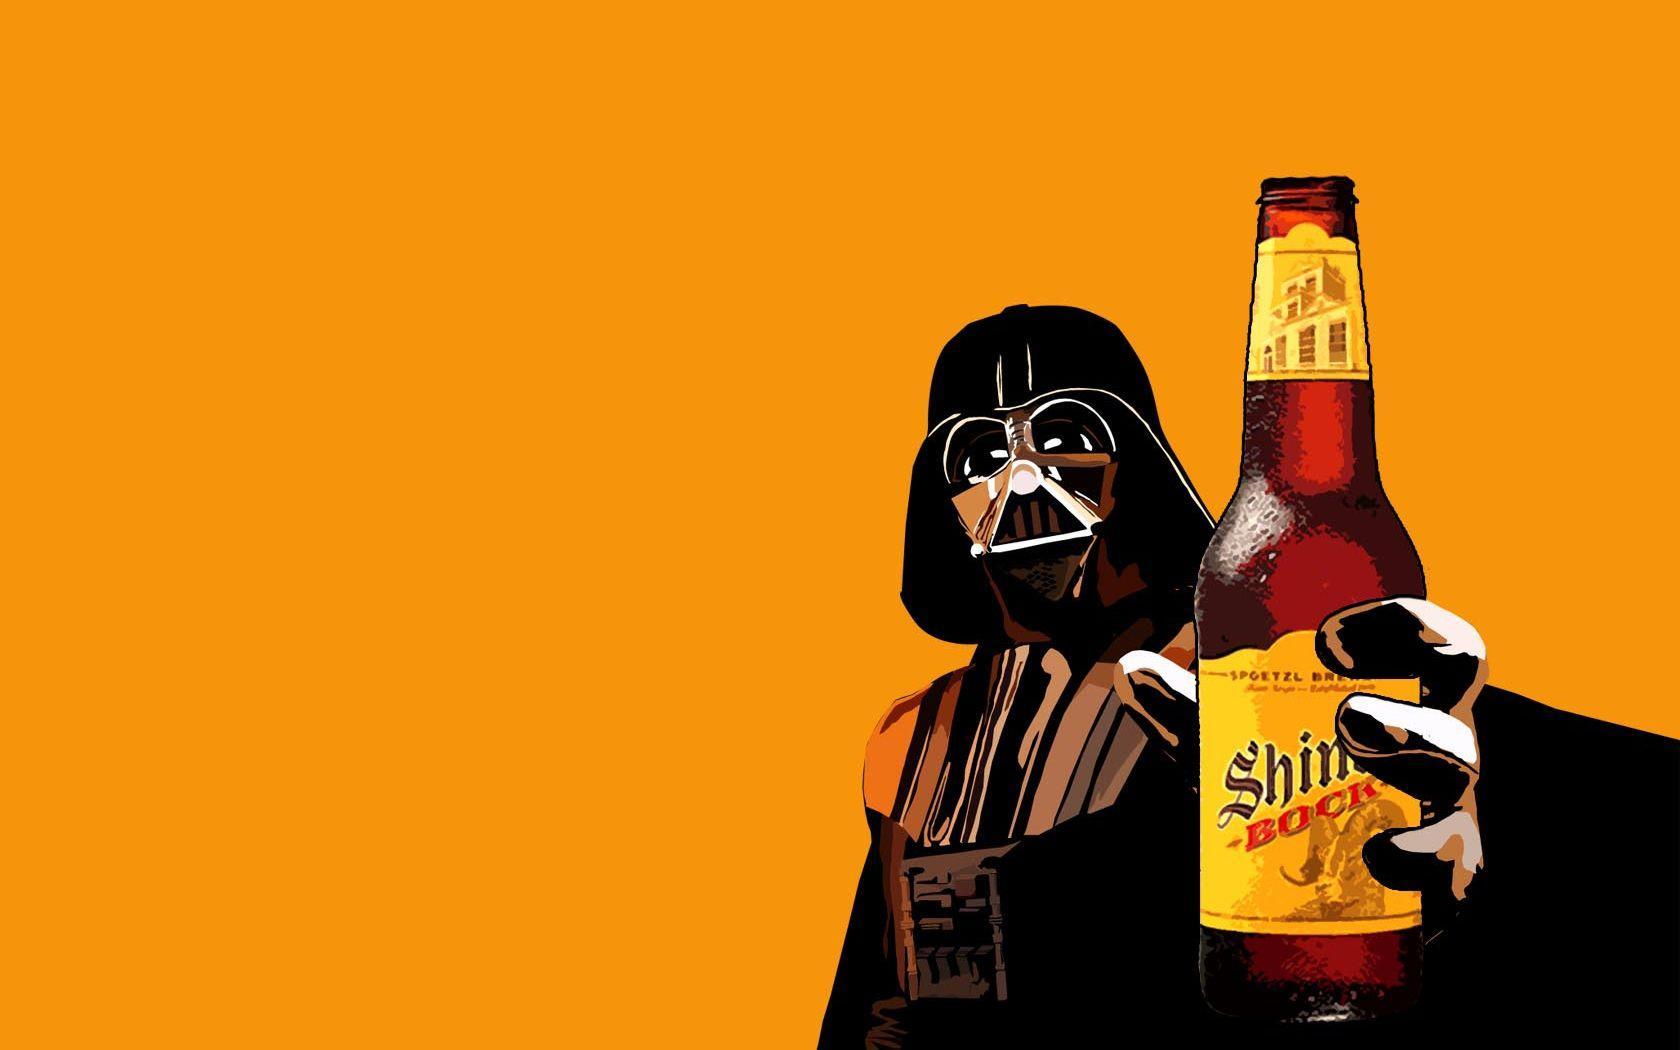 Download the Drunk Darth Vader Wallpaper, Drunk Darth Vader iPhone